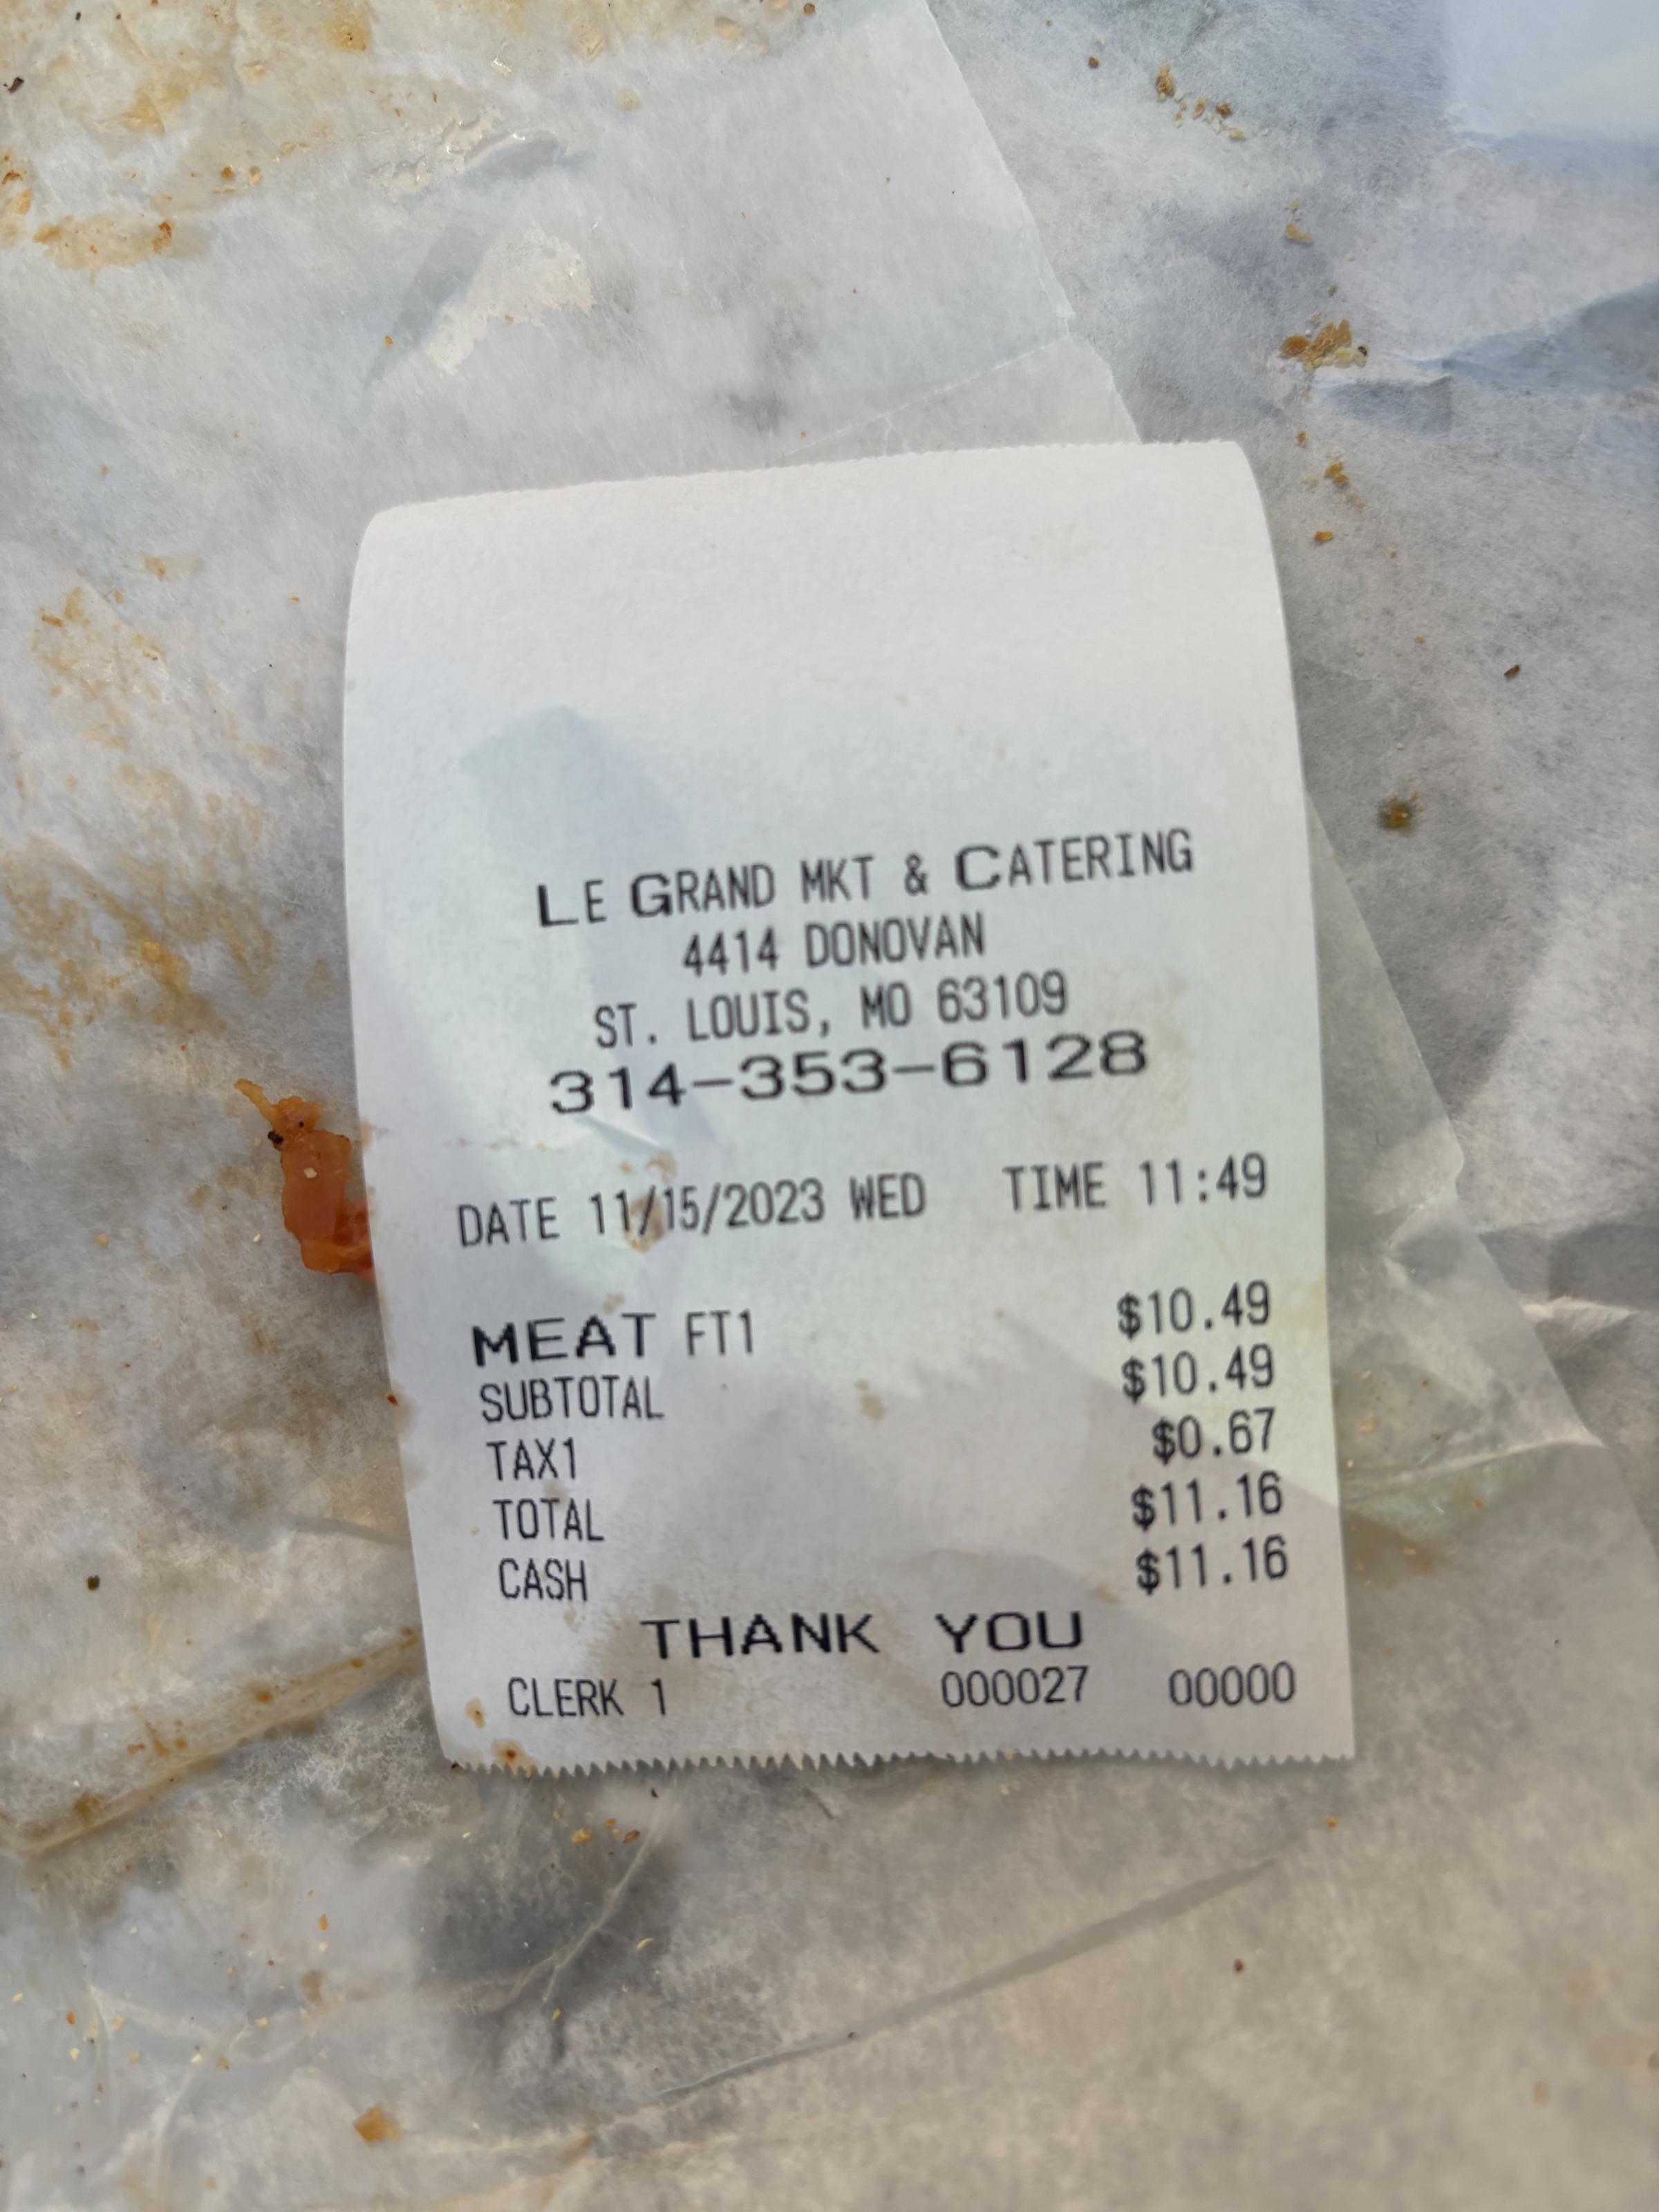 LeGrand's receipt